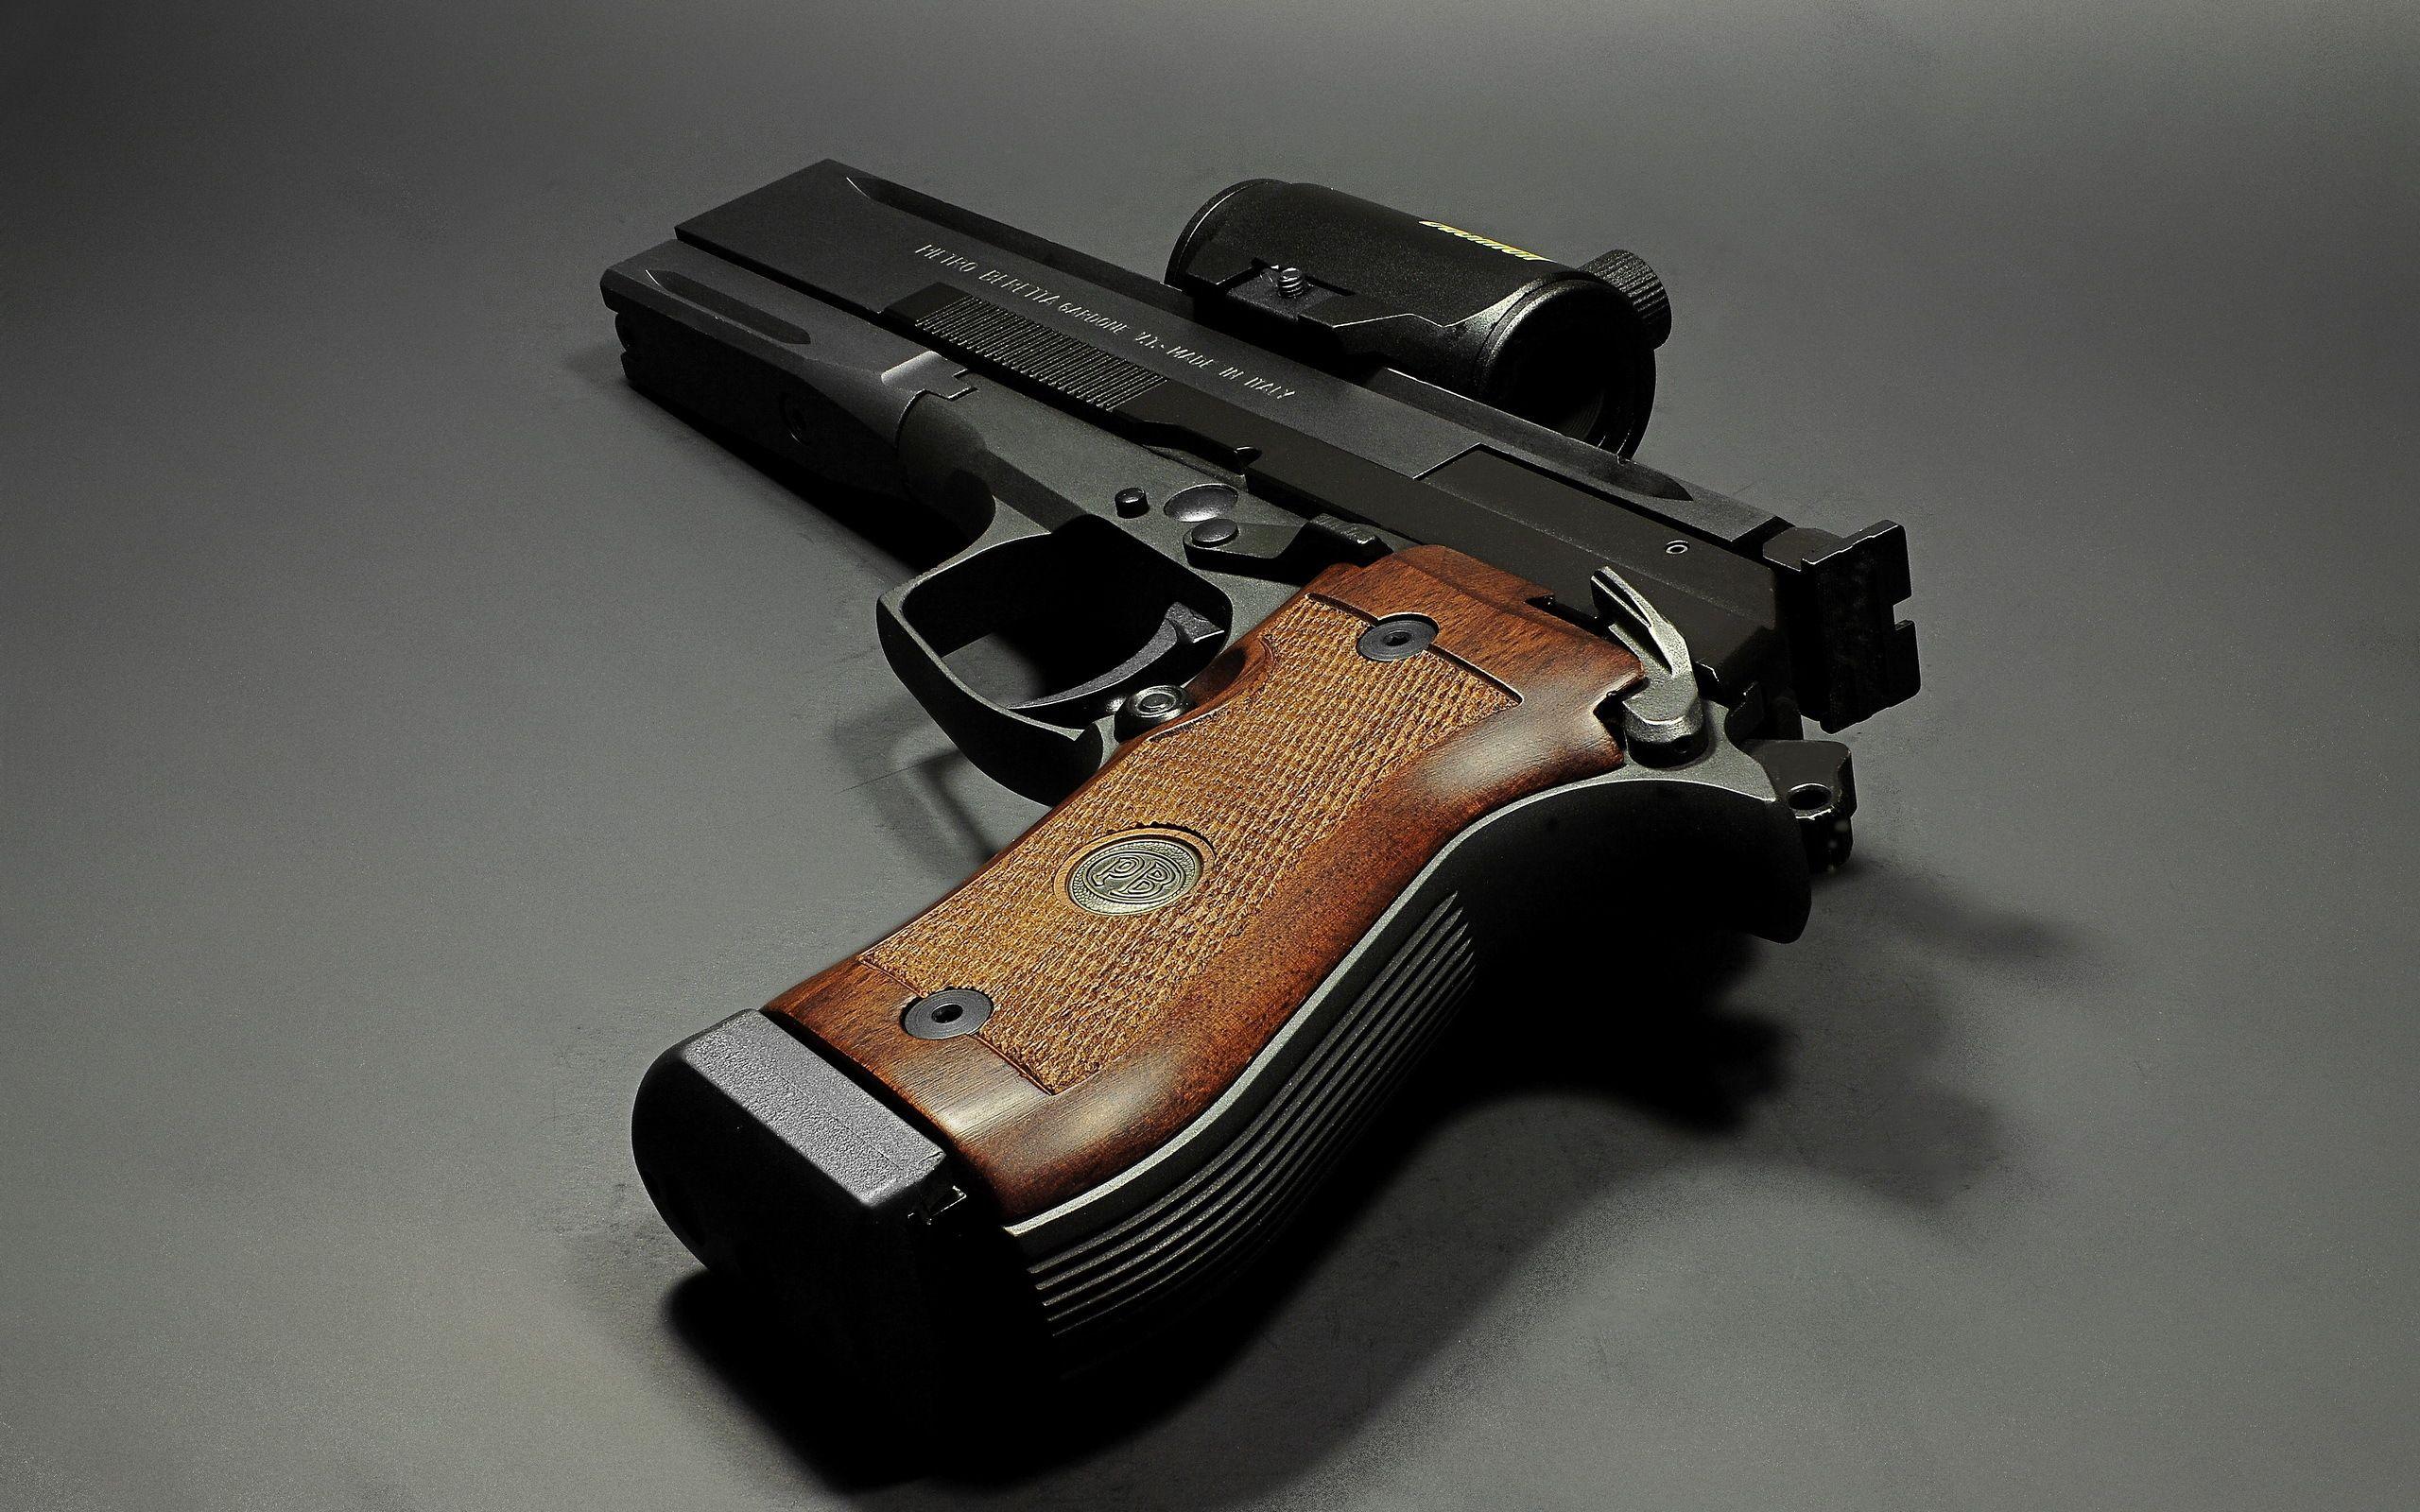 Beretta Pistol HD Wallpaper and Background Image